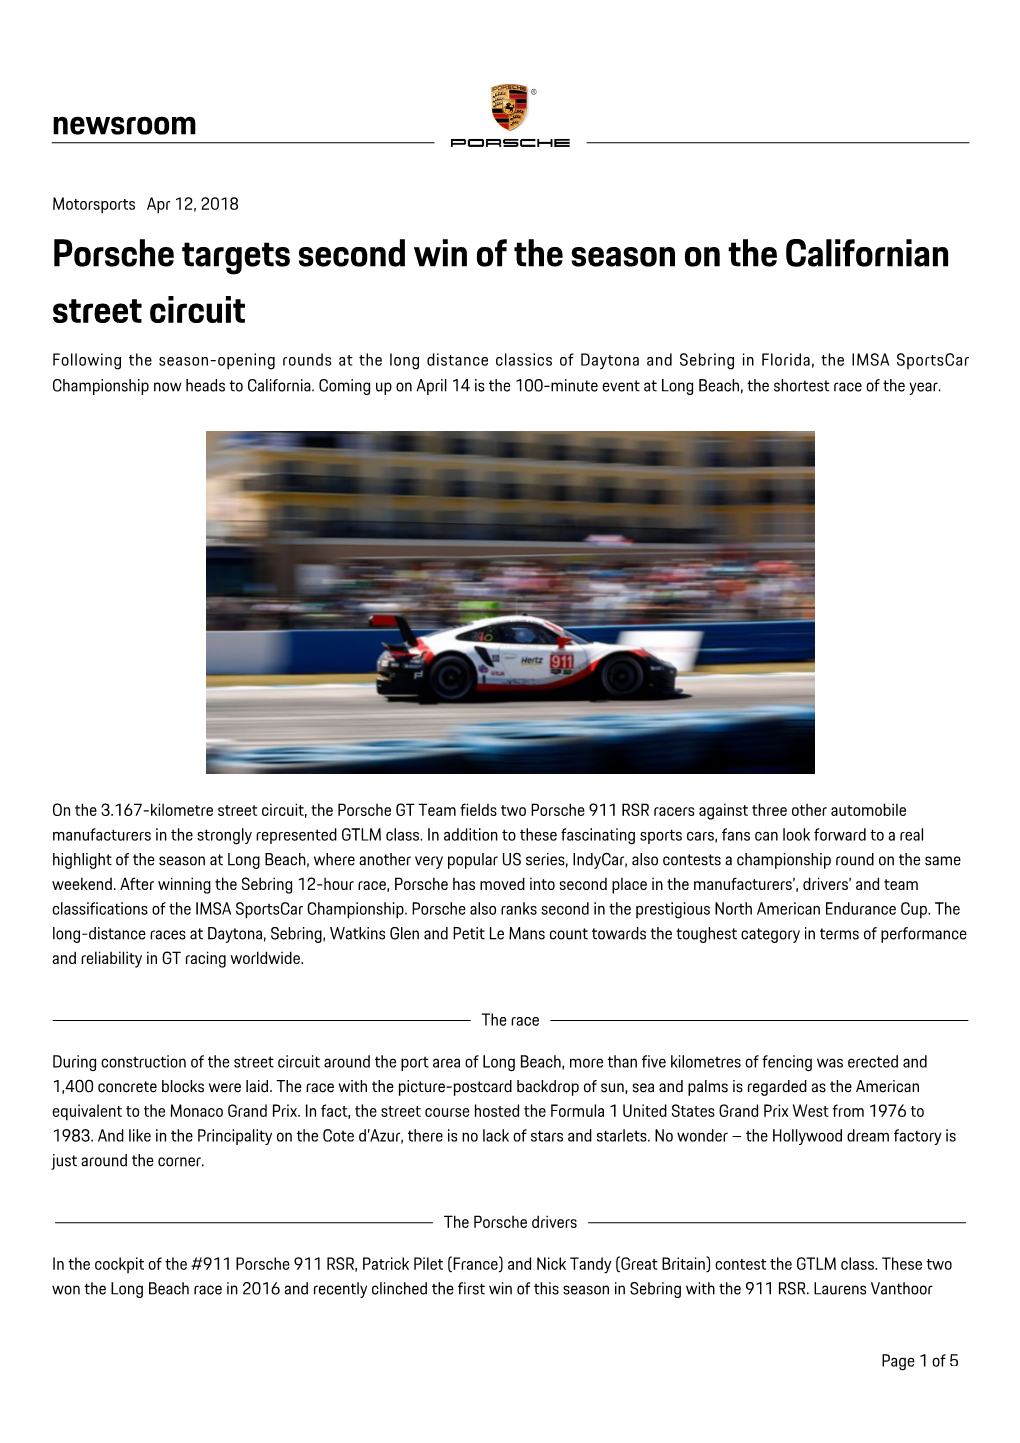 Porsche Targets Second Win of the Season on the Californian Street